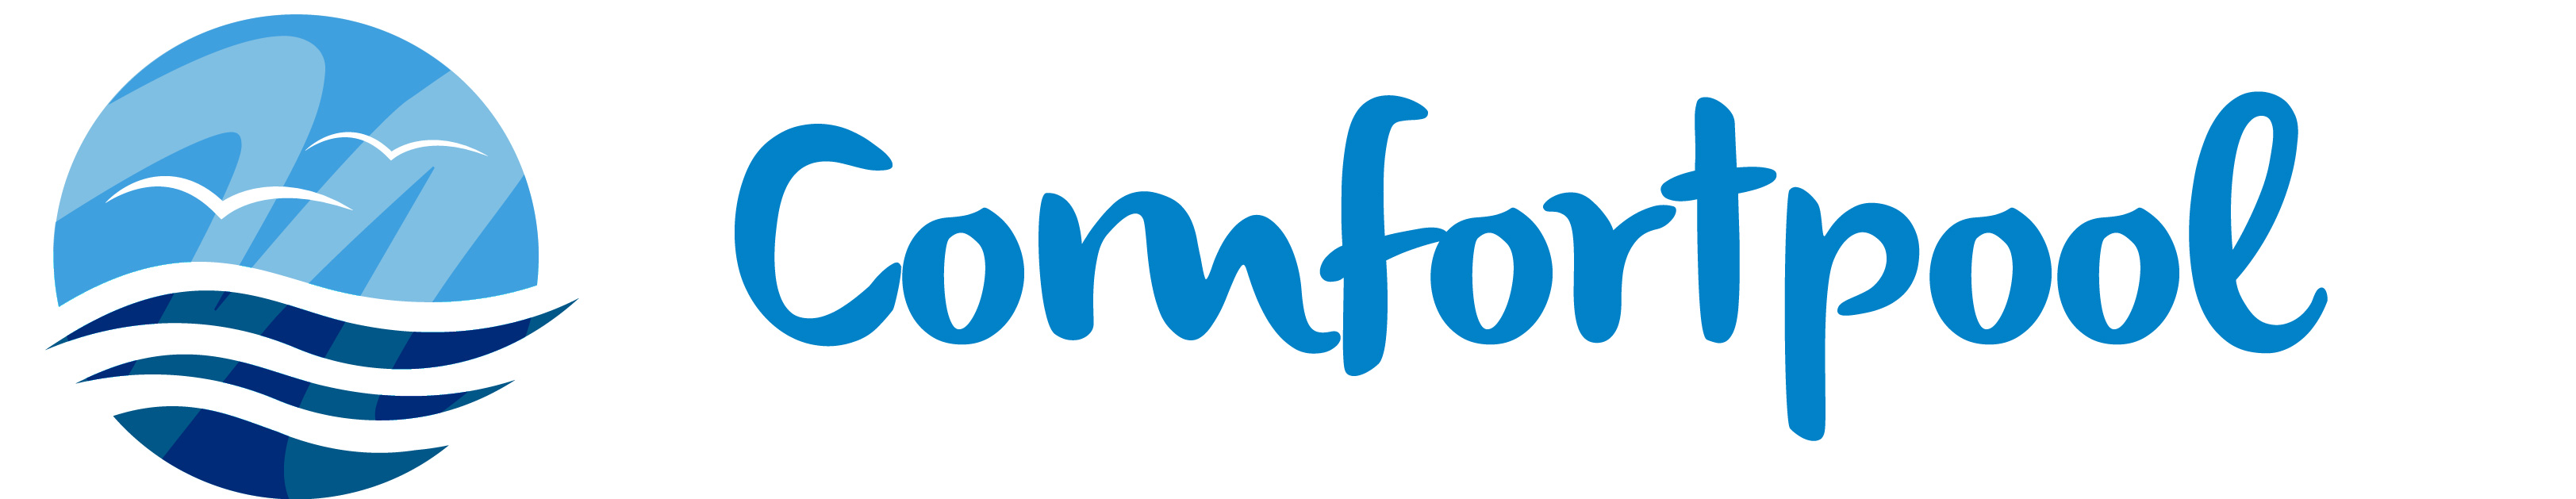 Comfortpool logo